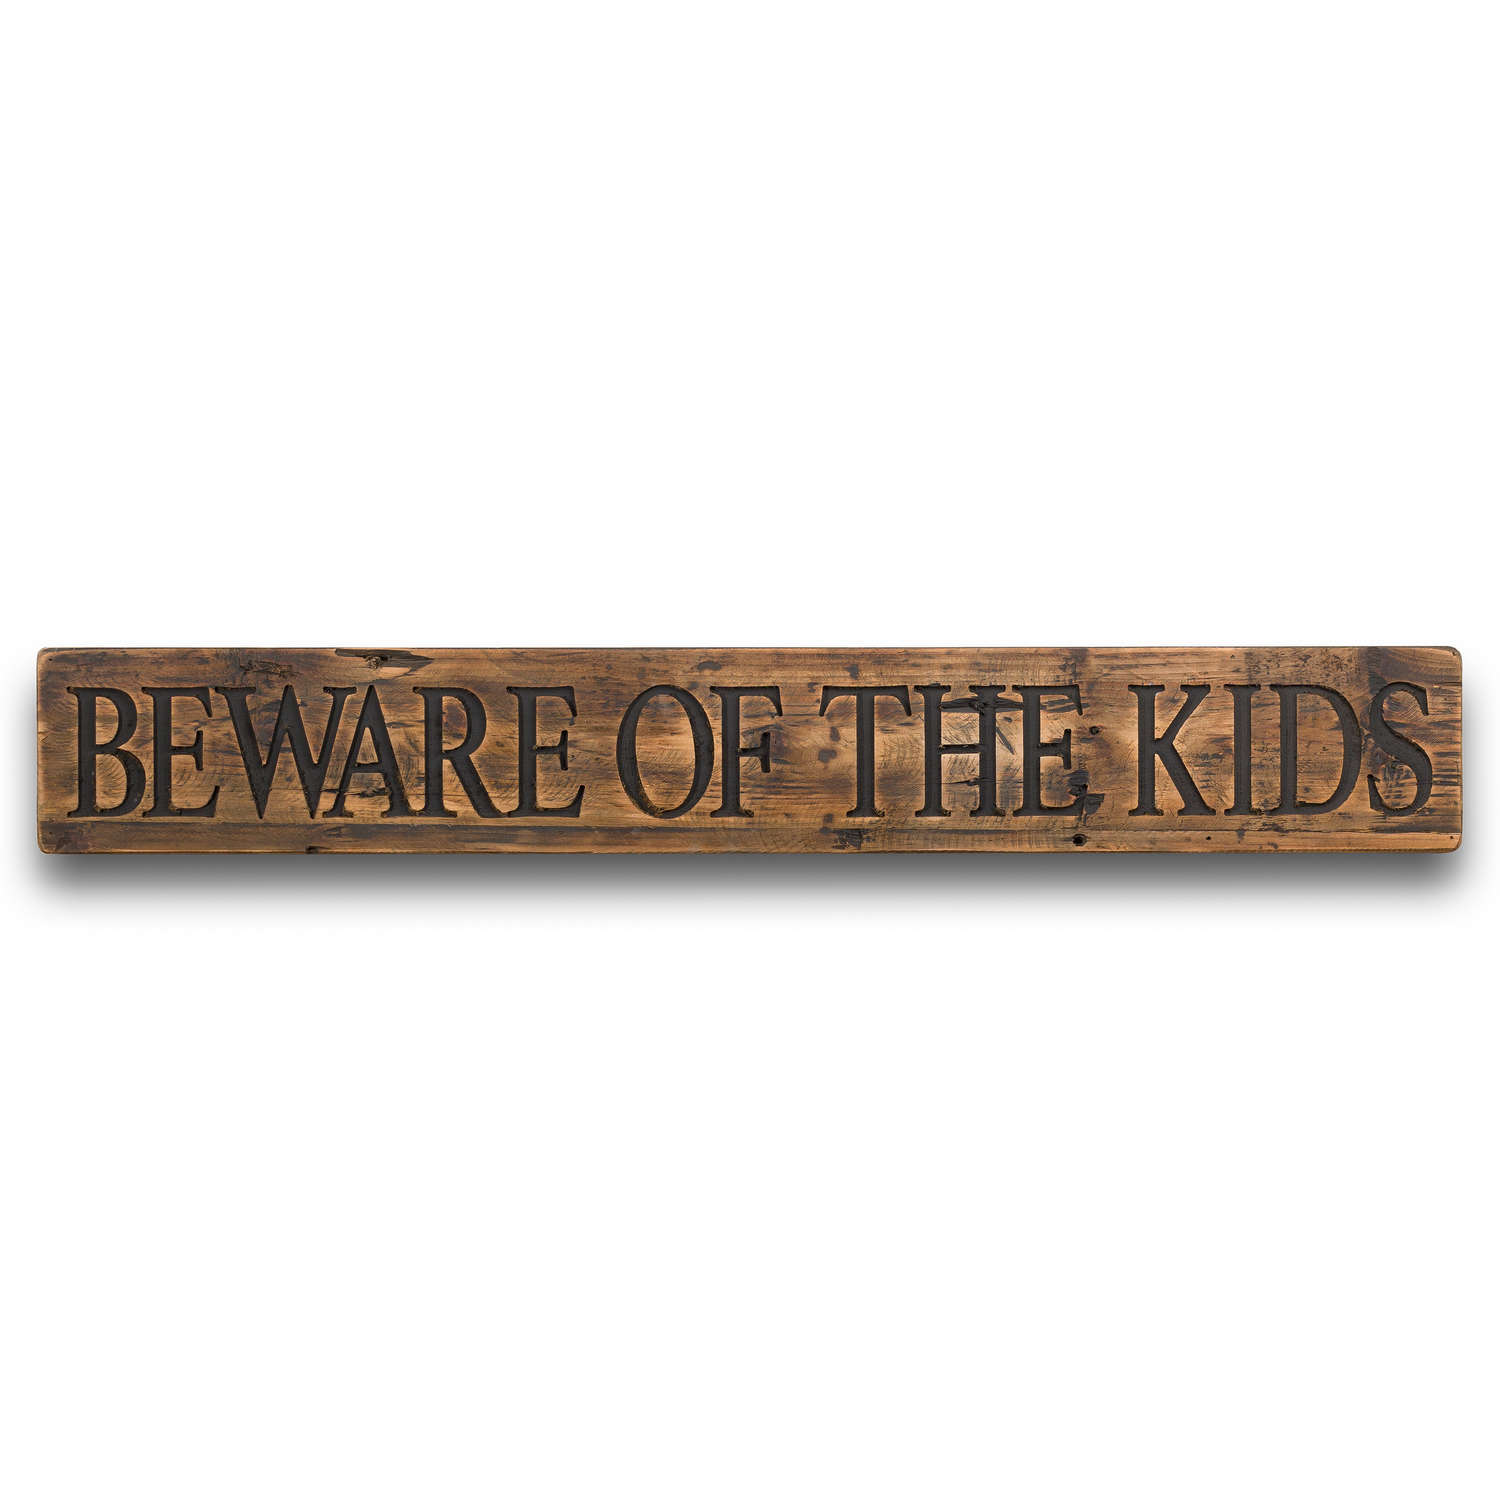 Beware Of The Kids Rustic Wooden Message Plaque - Image 1